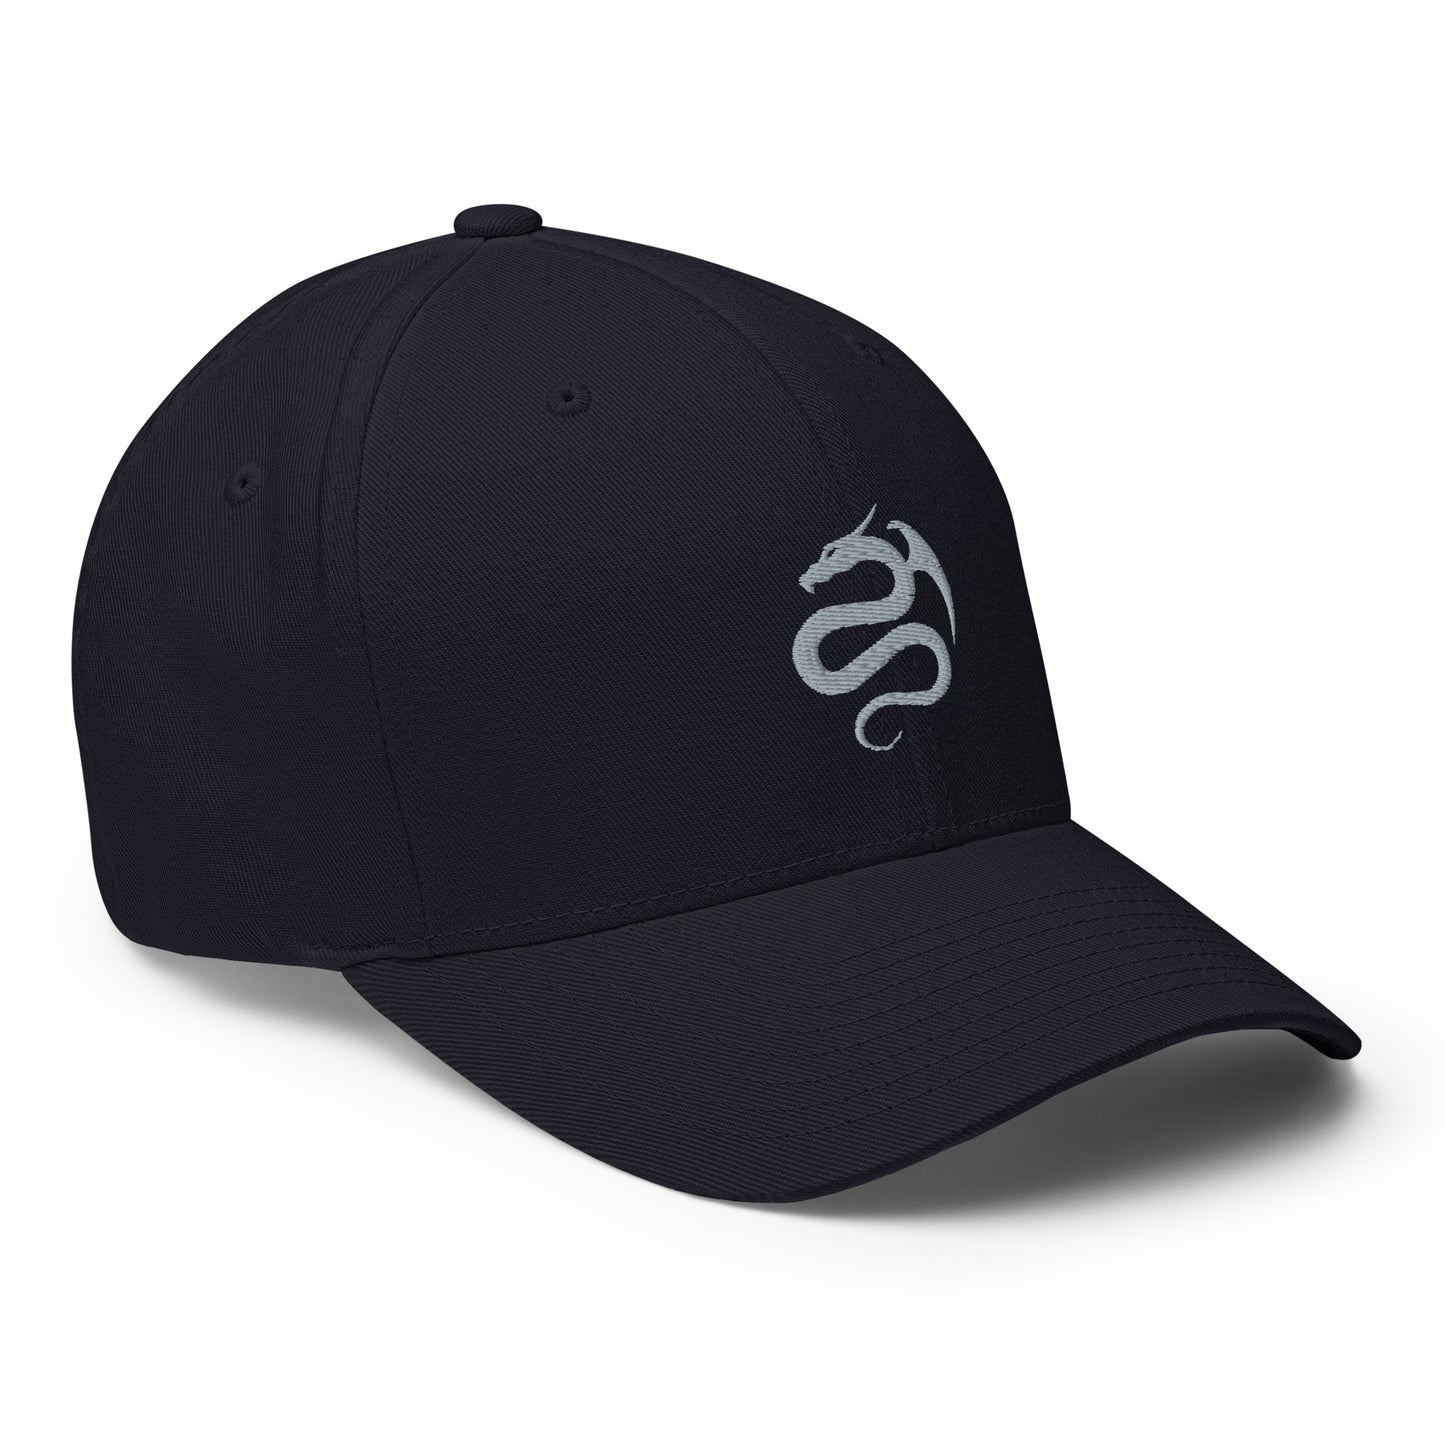 Baseball Cap with Silver Dragon Symbol